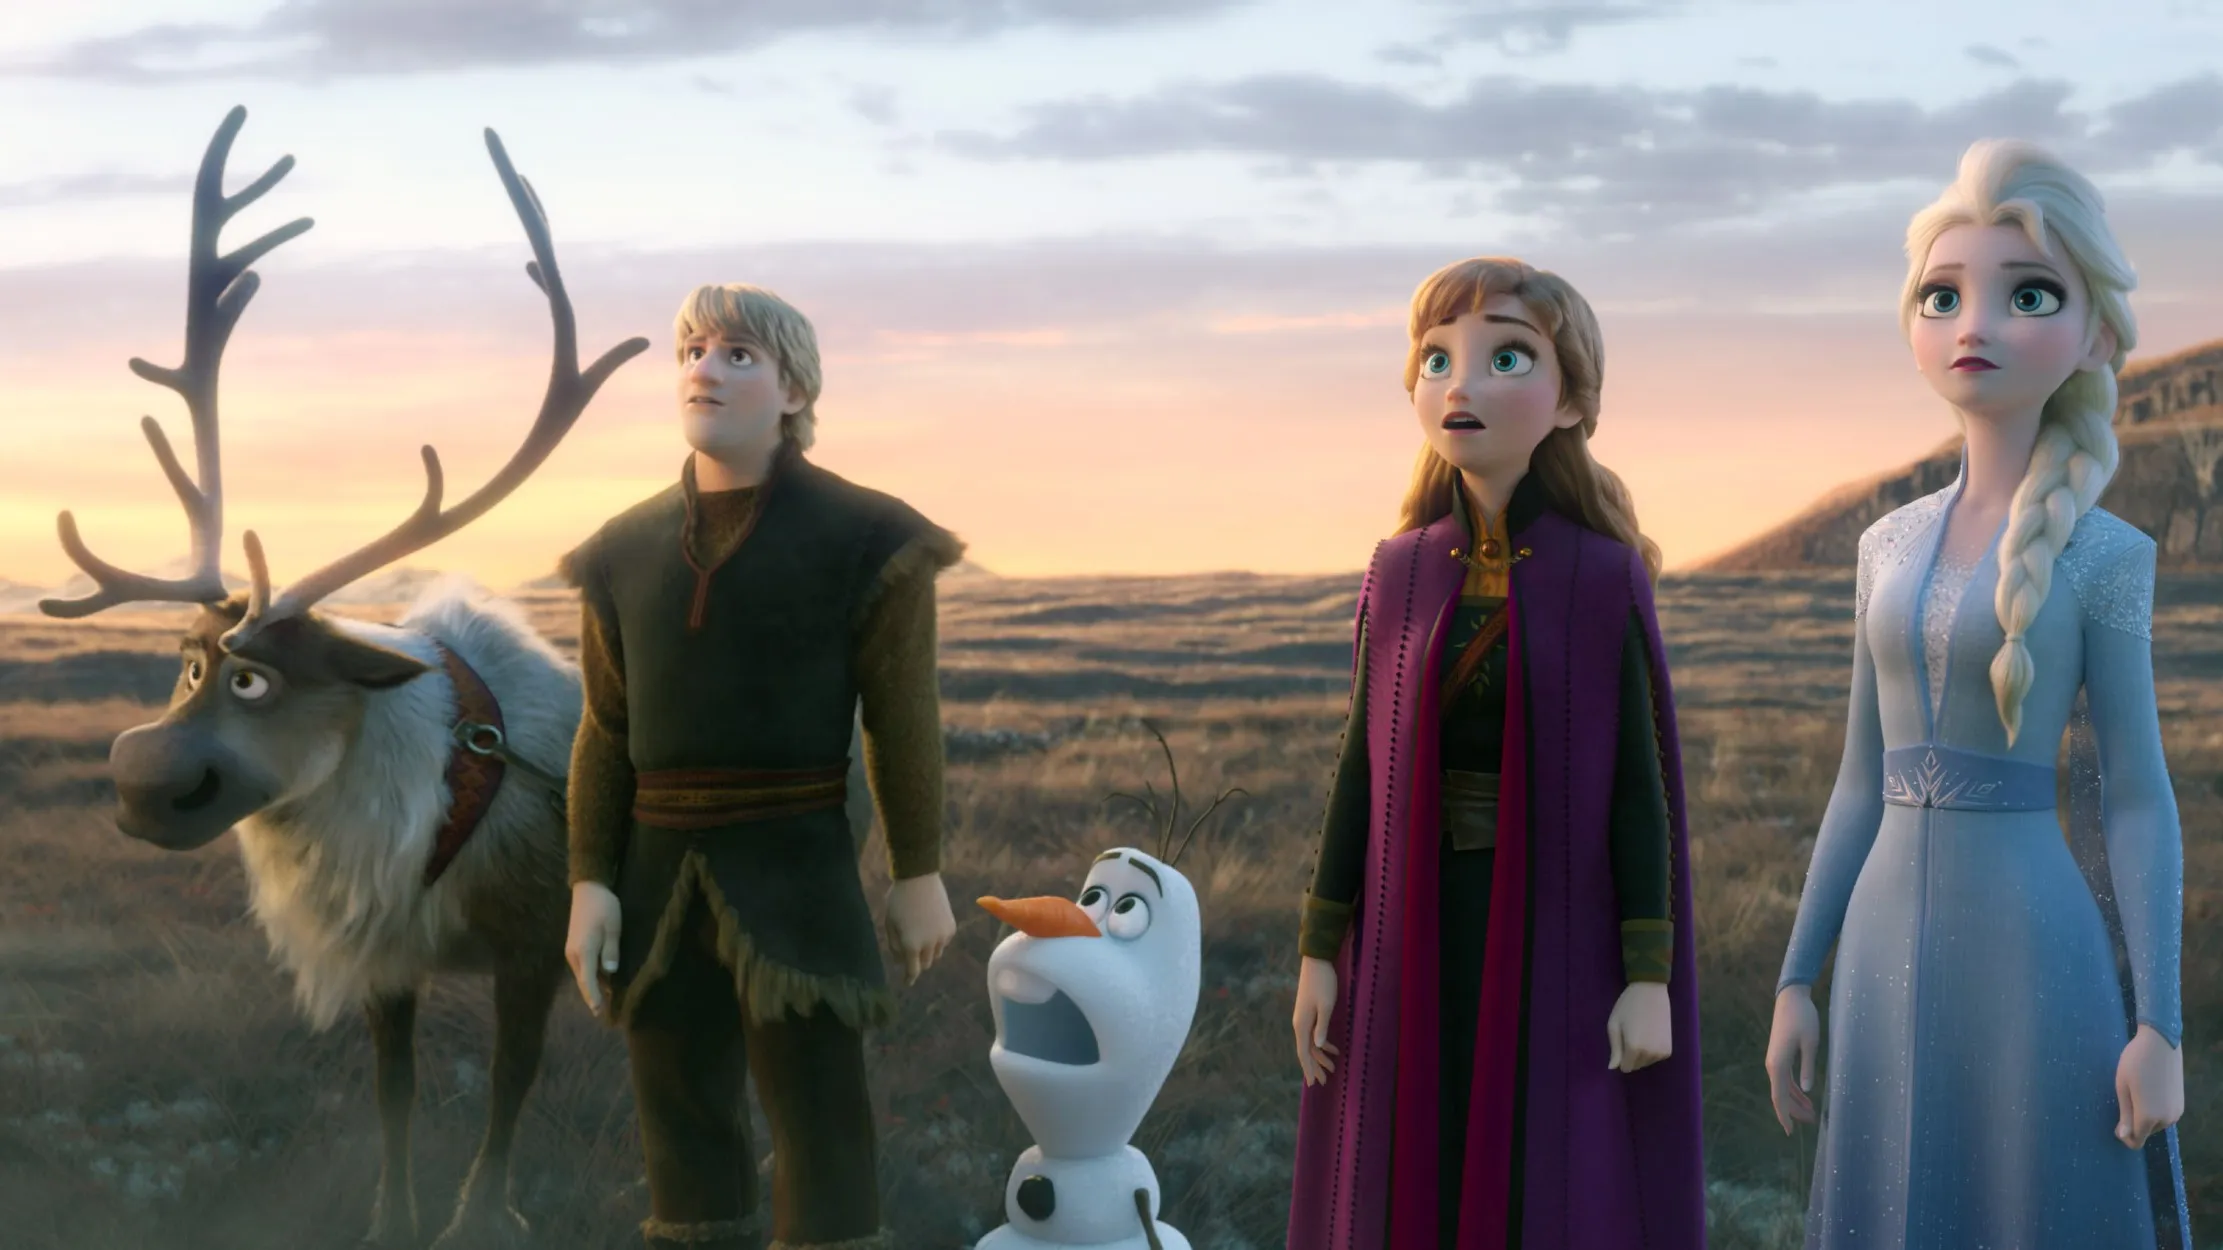 Frozen 3 A New Chapter in Disney's Enchanting Saga